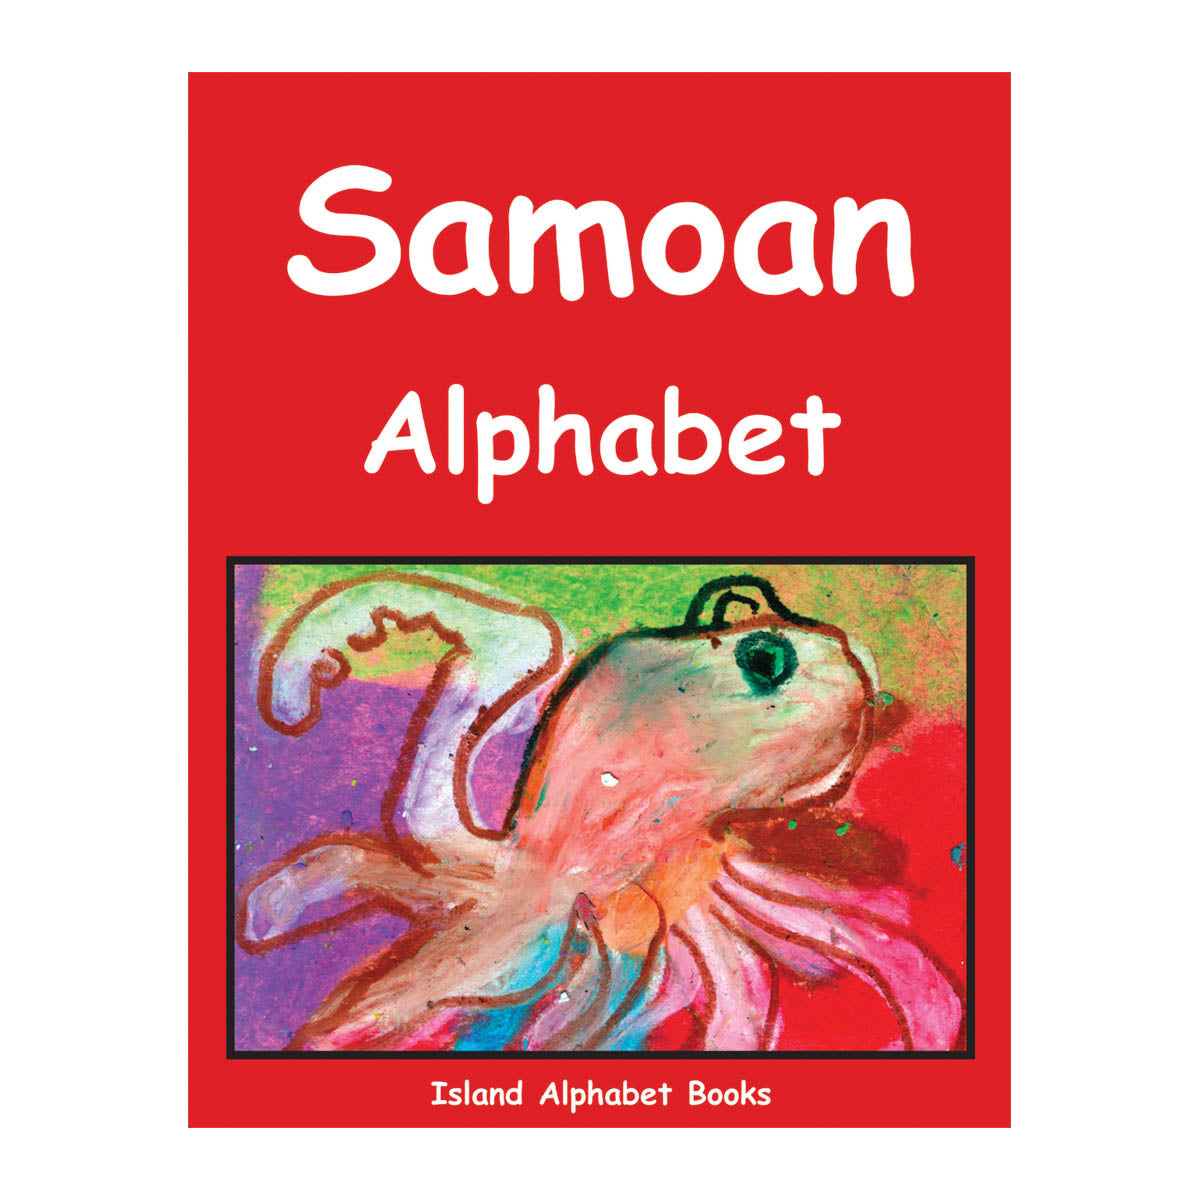 Island Alphabet: Samoan Alphabet